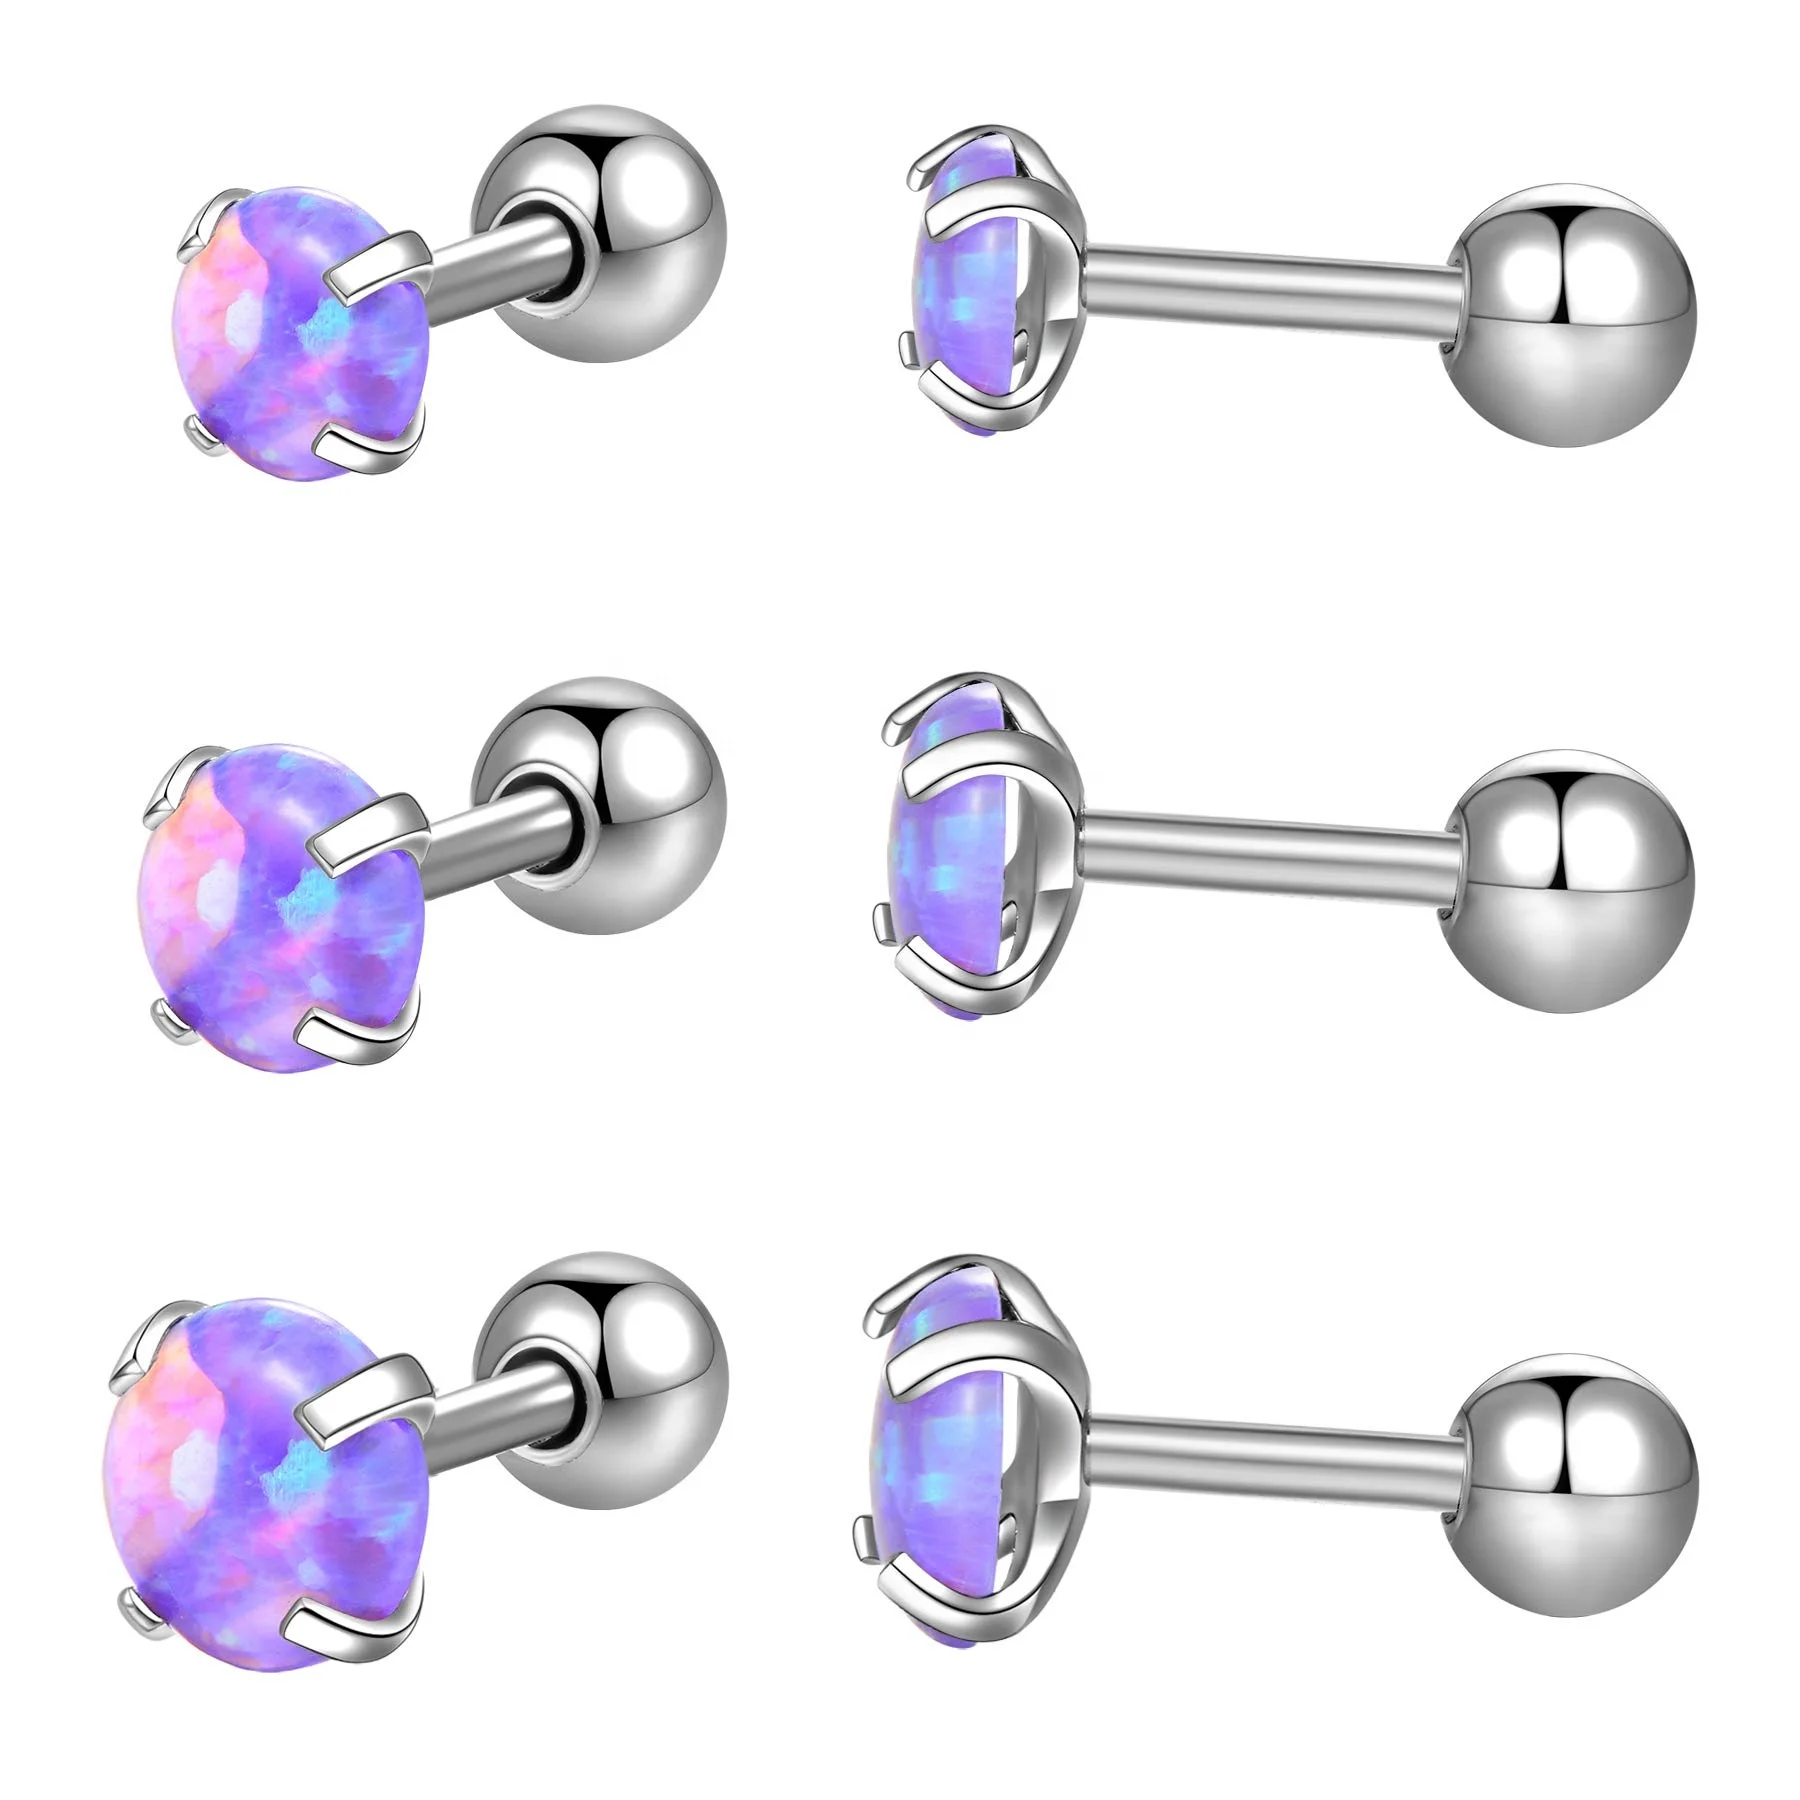 

Real Opal 16g 316l Surgical Stainless Steel Cartilage Earrings Studs Set Forward Helix Piercing Jewellery Cartlidge Earrings, White ,pink, blue, green, purple